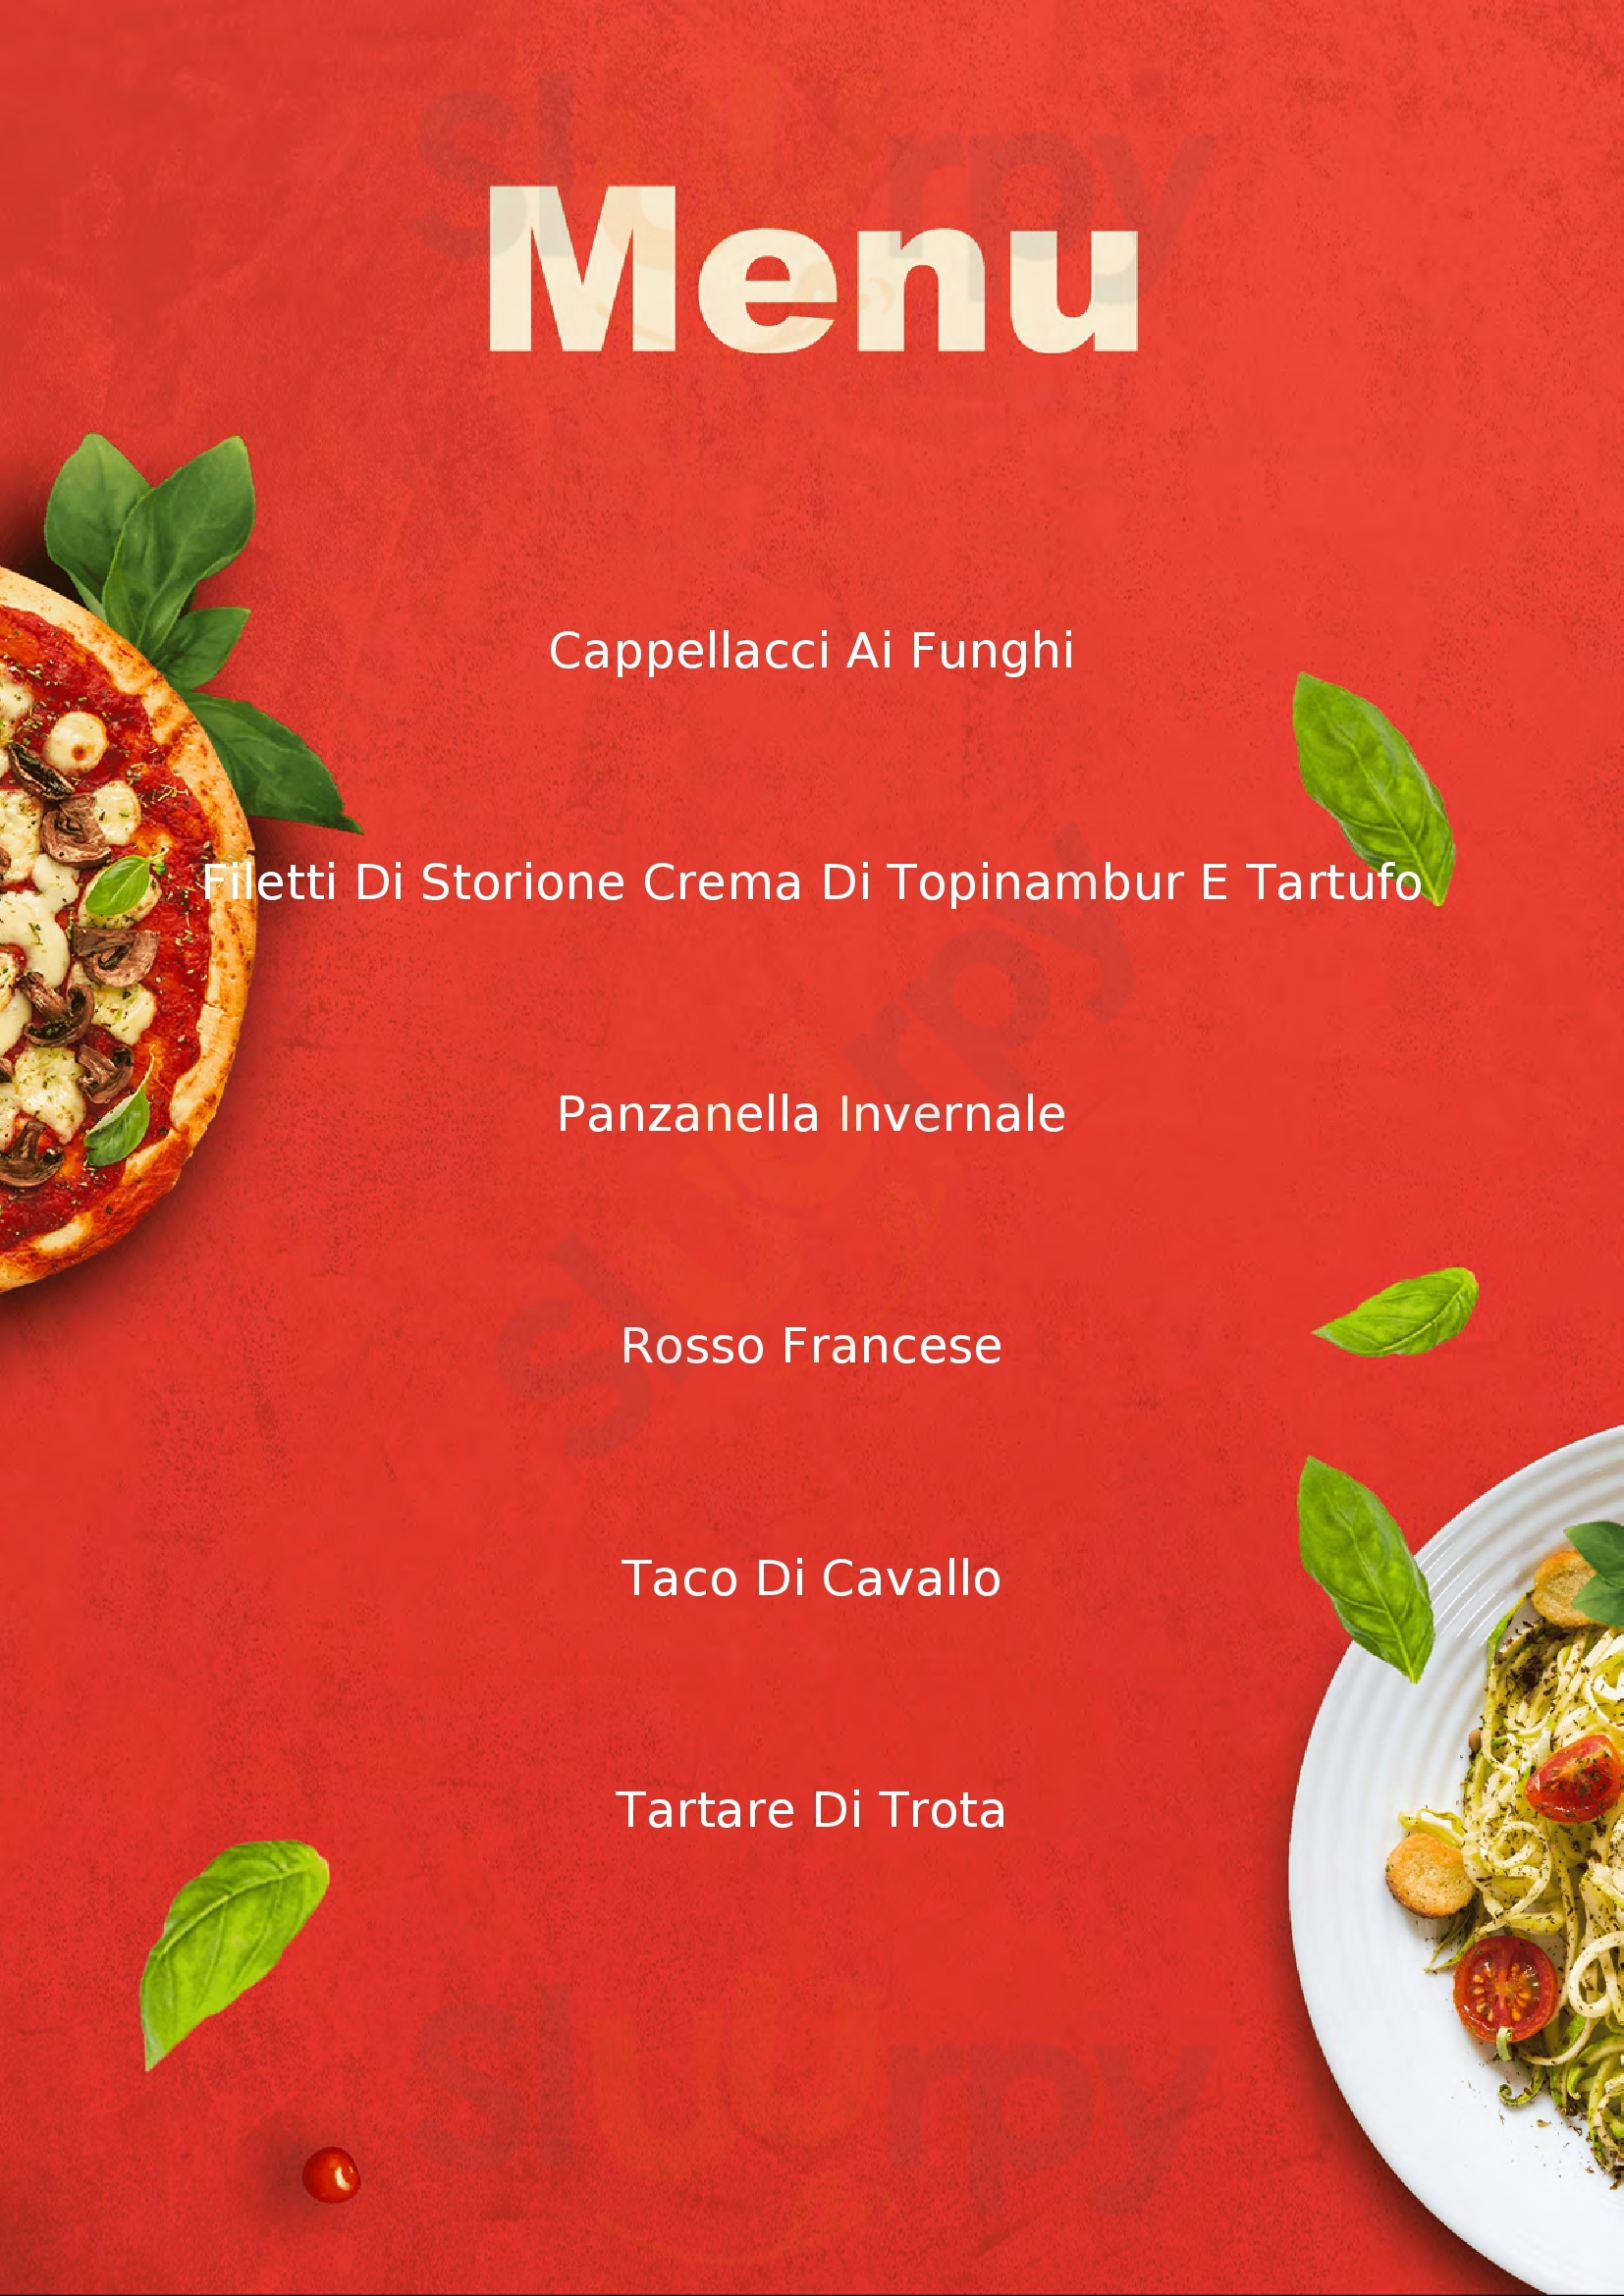 Soj - Vino e Cucina Parma menù 1 pagina